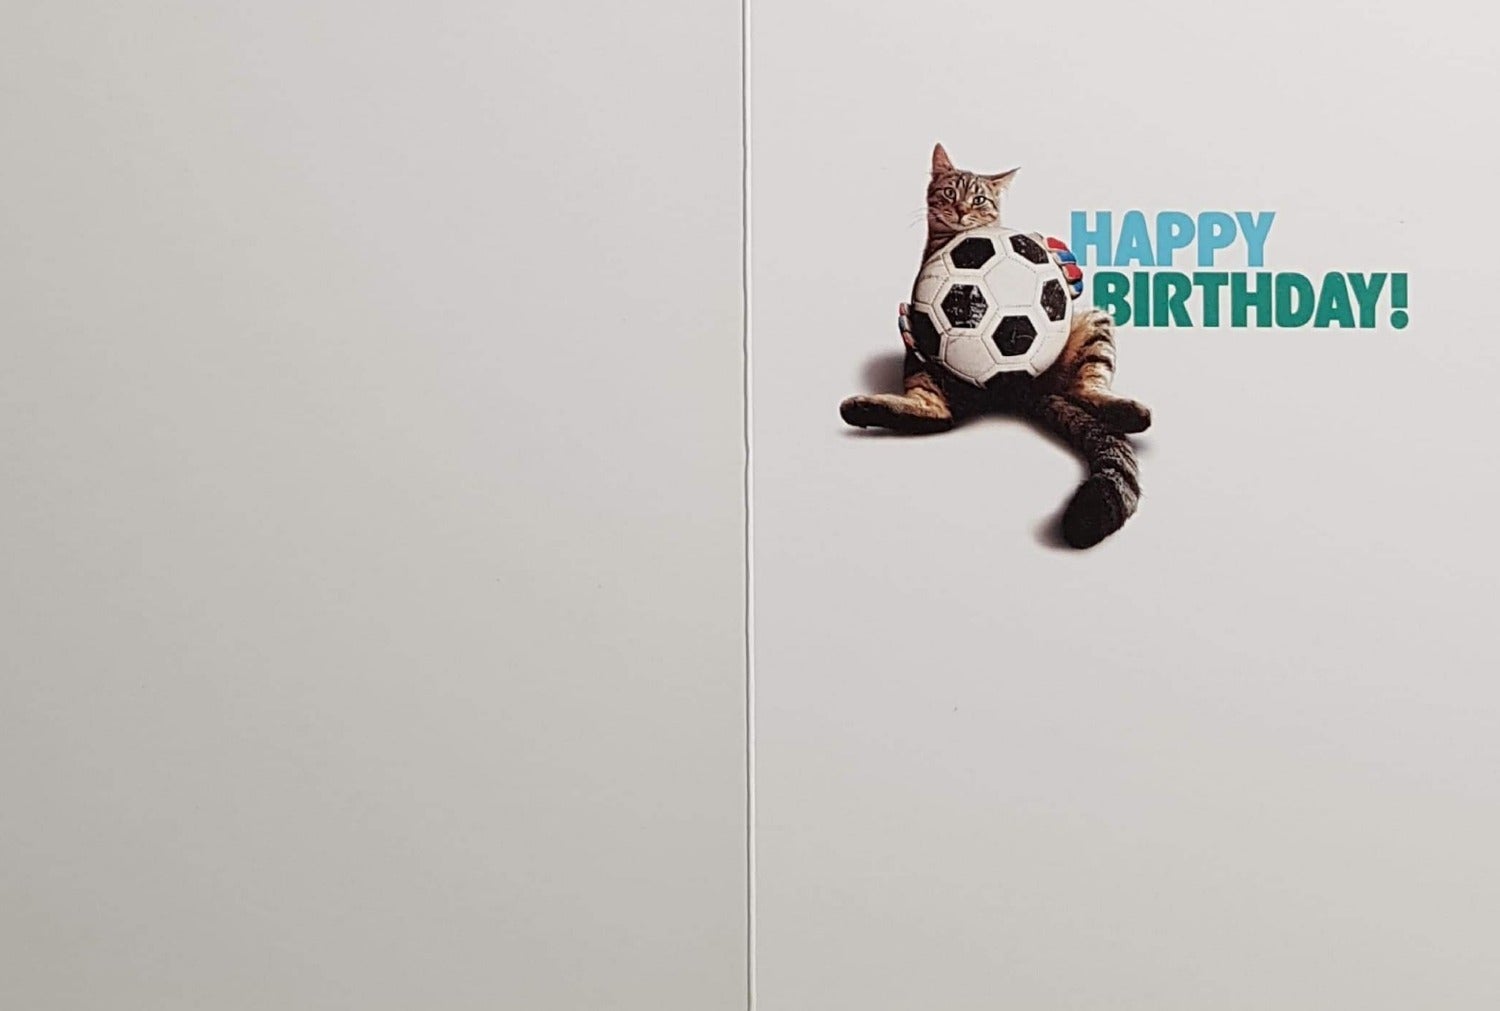 Birthday Card - Humour / Cat As A Football Player